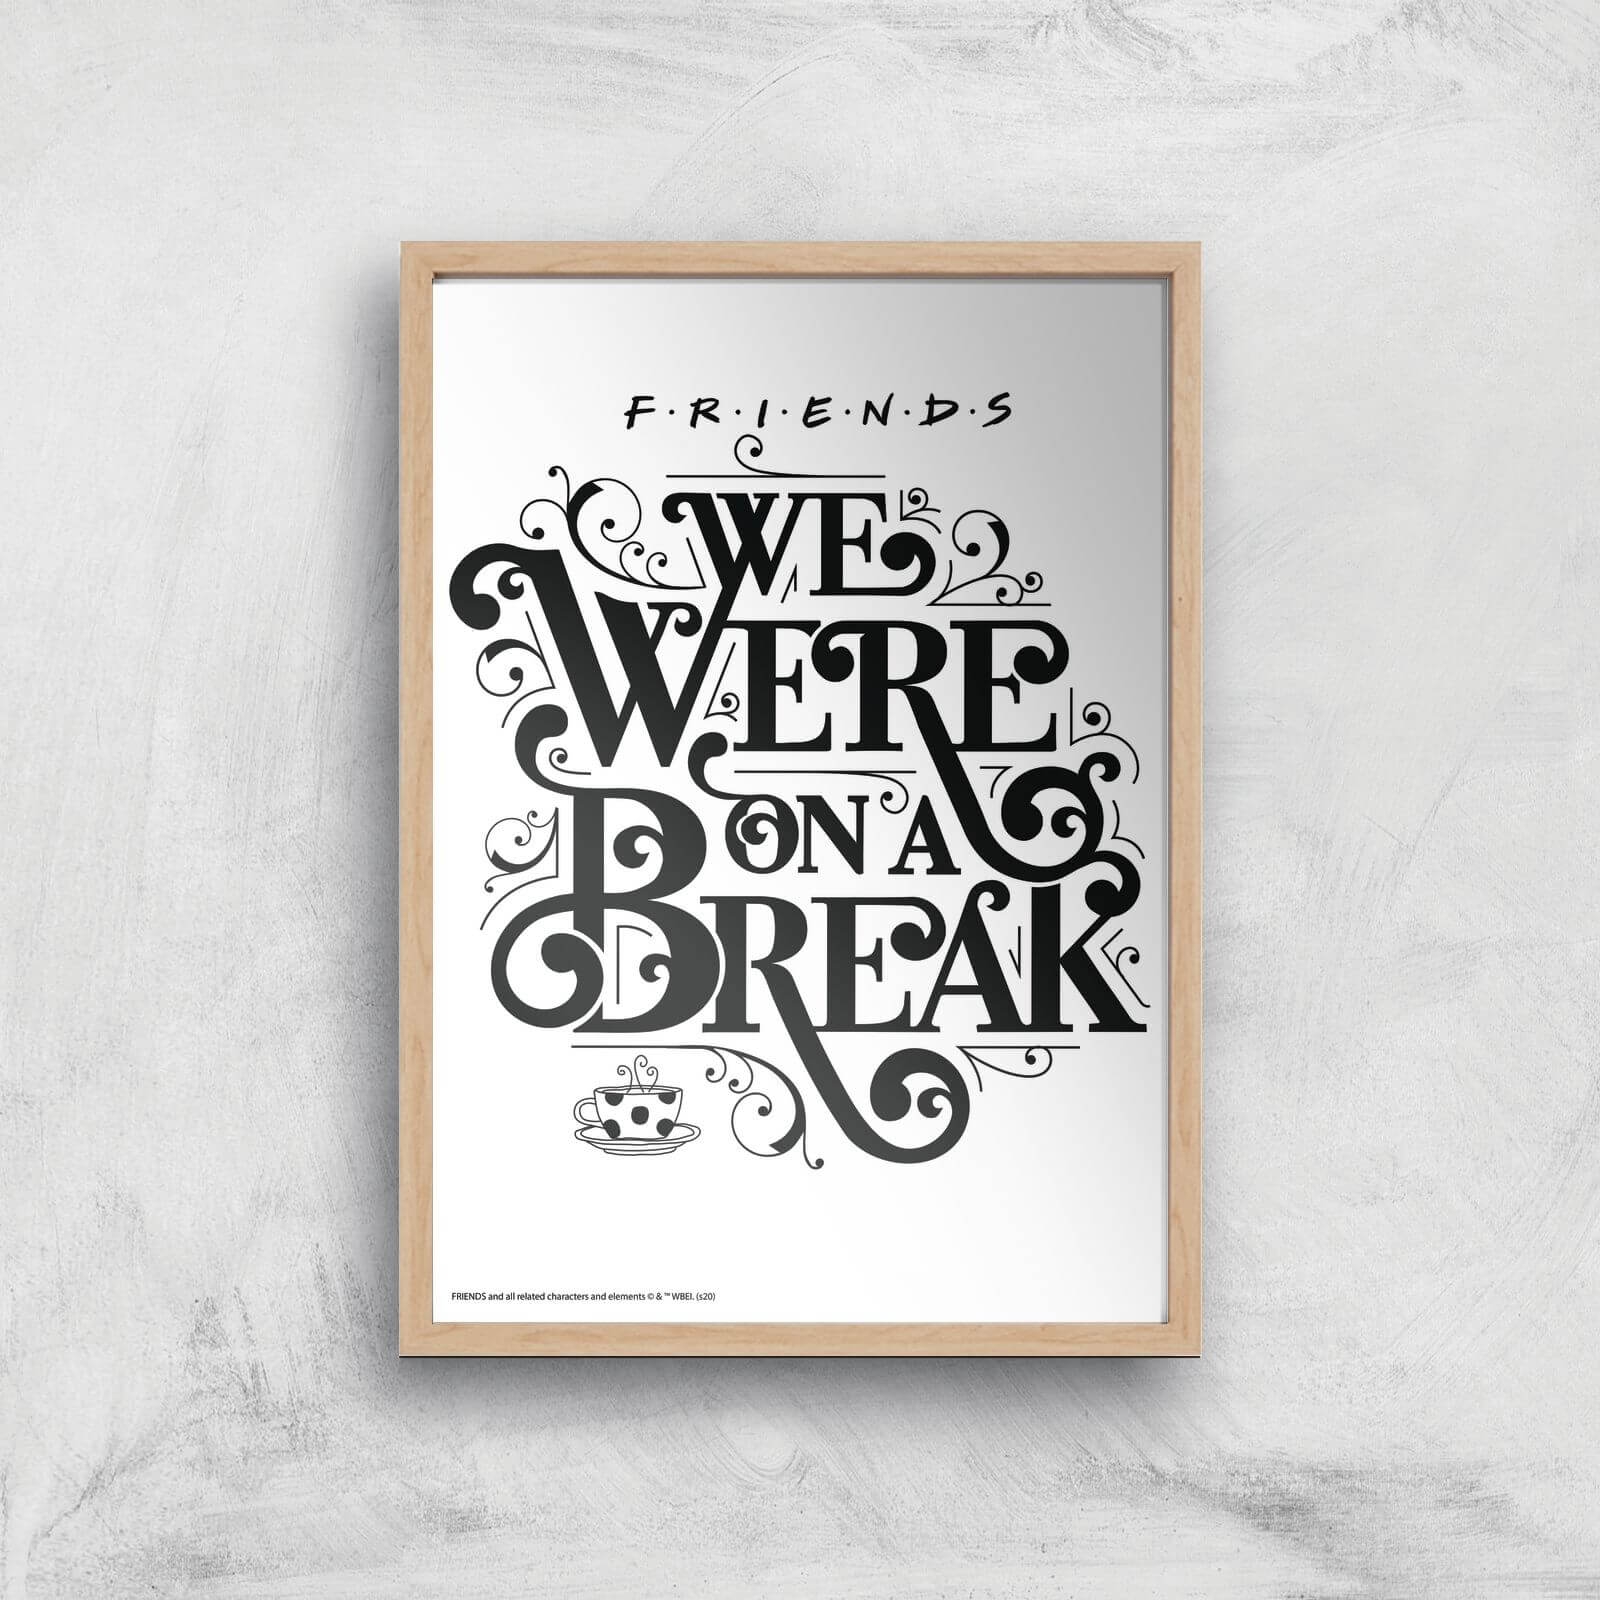 Friends We Were On A Break Giclee Art Print - A3 - Wooden Frame